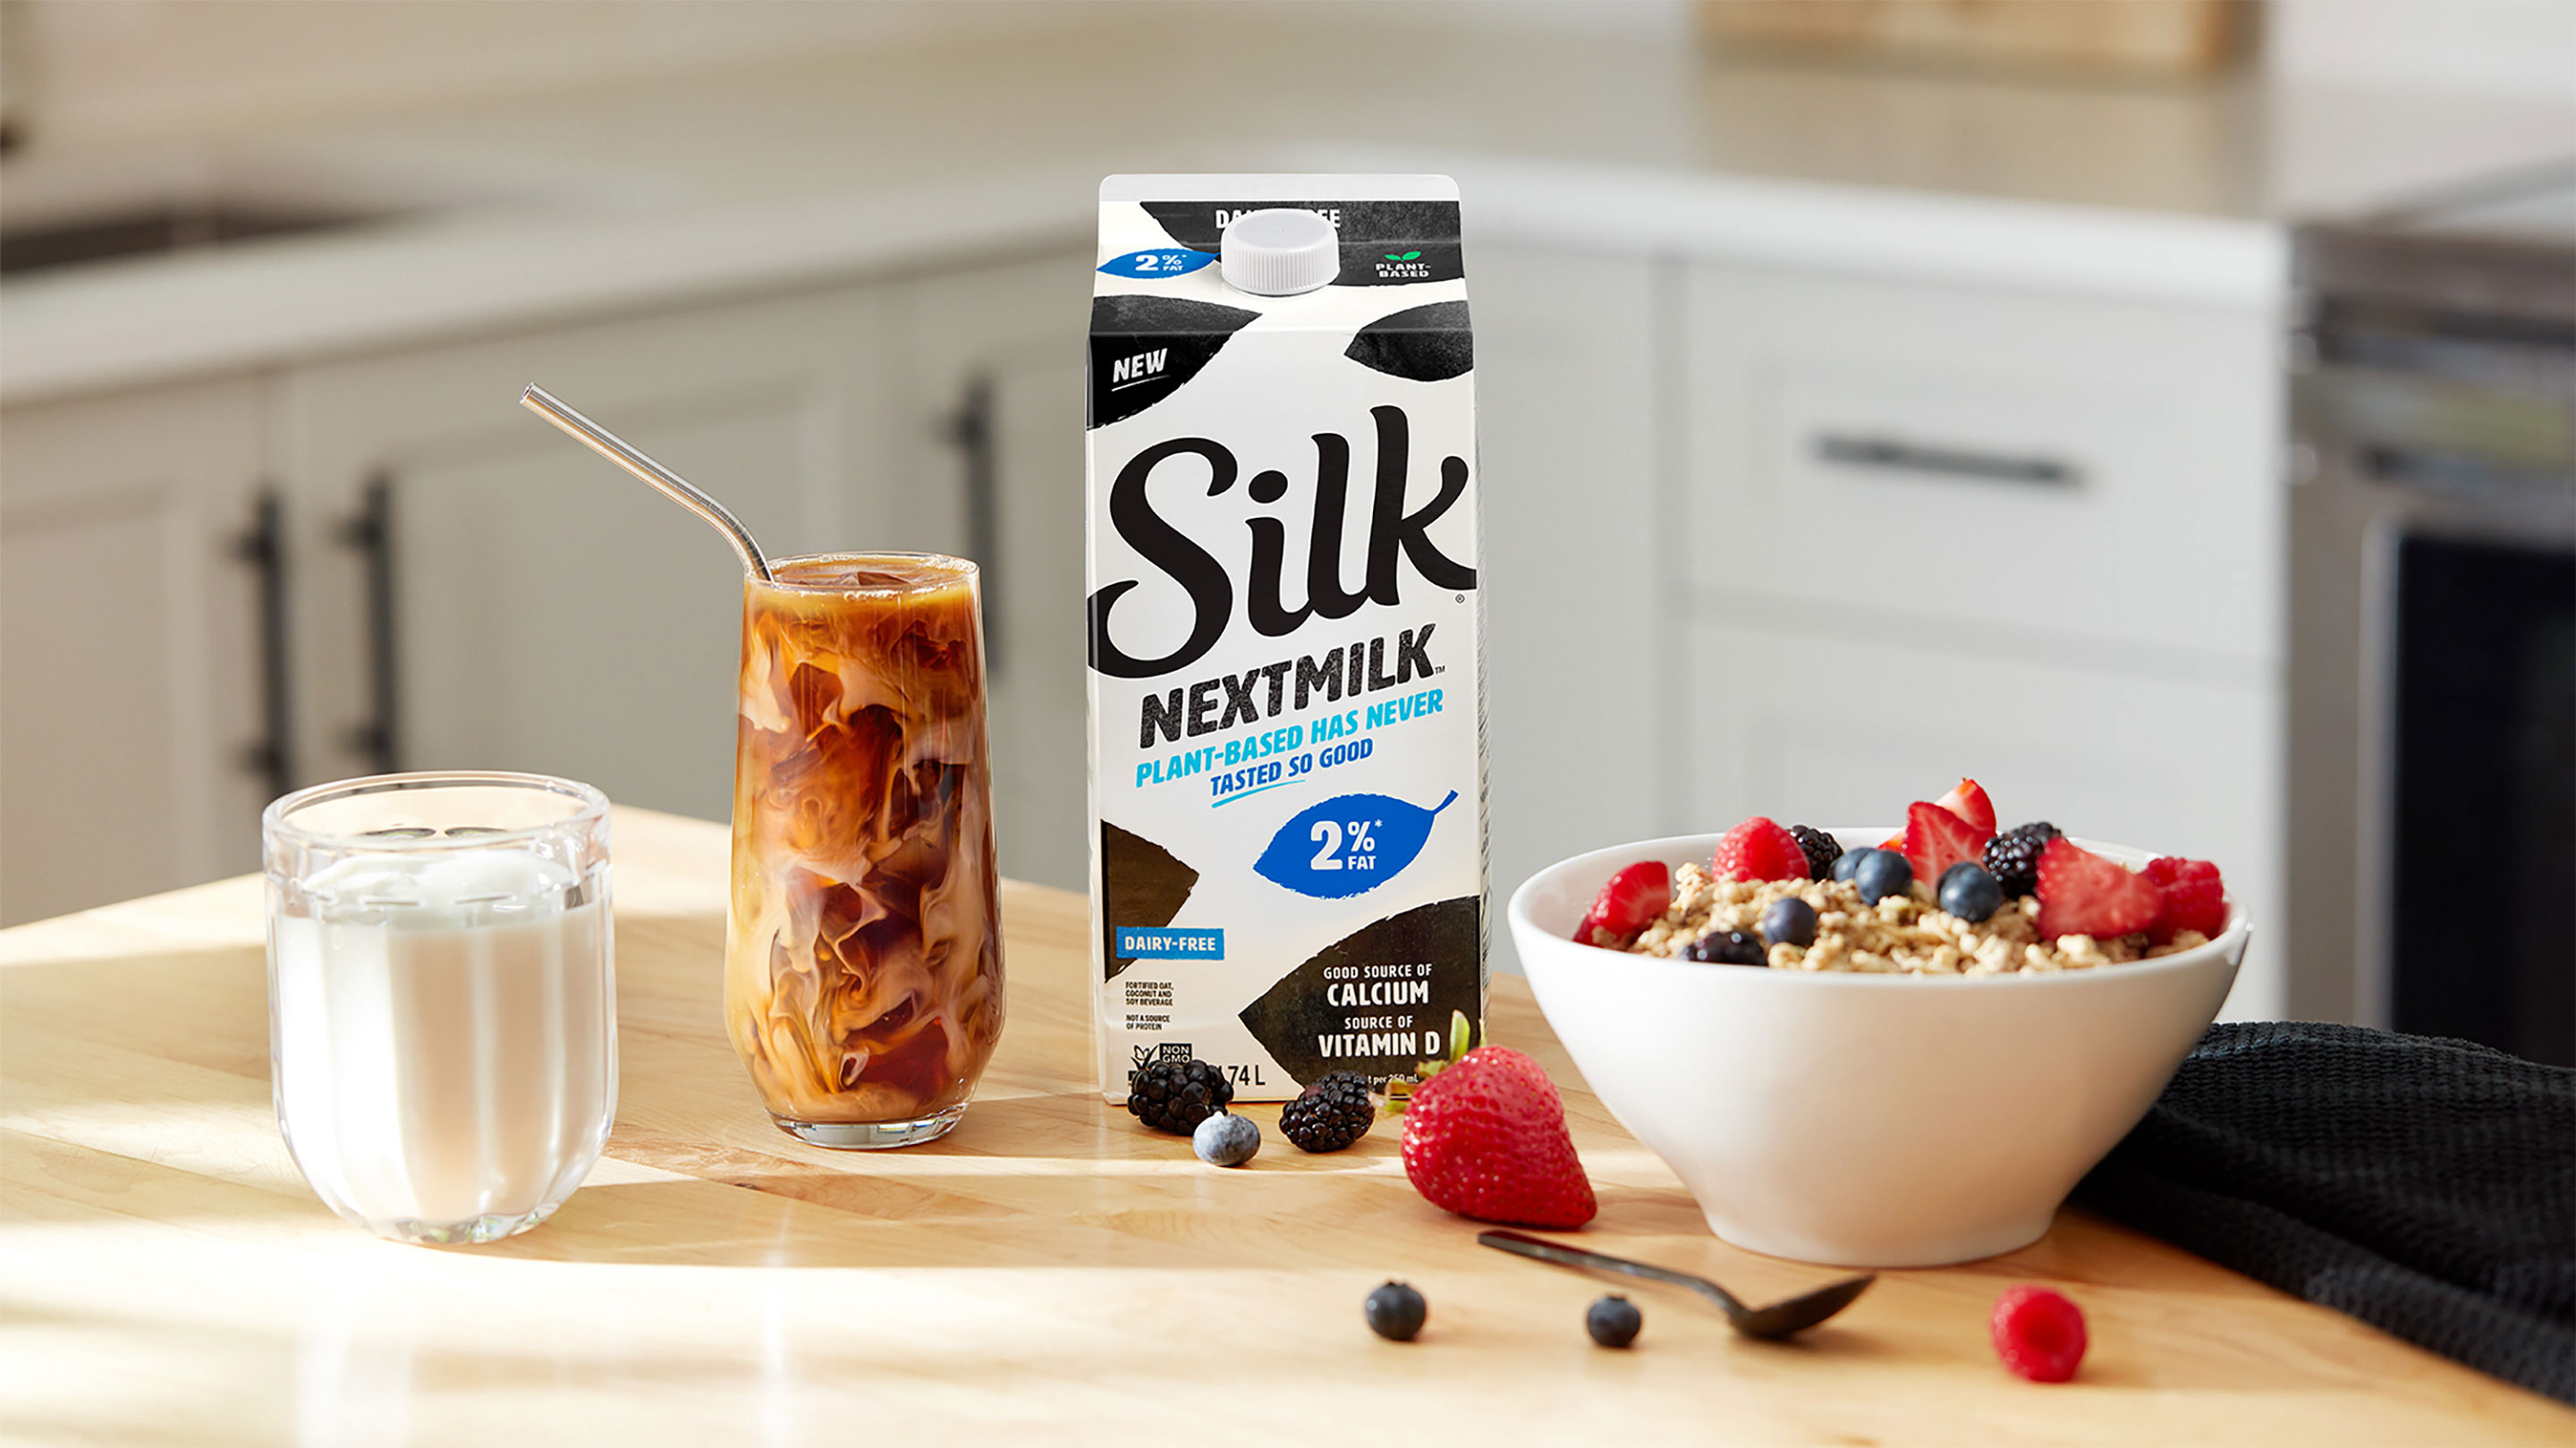 Silk NextMilk with Cereal